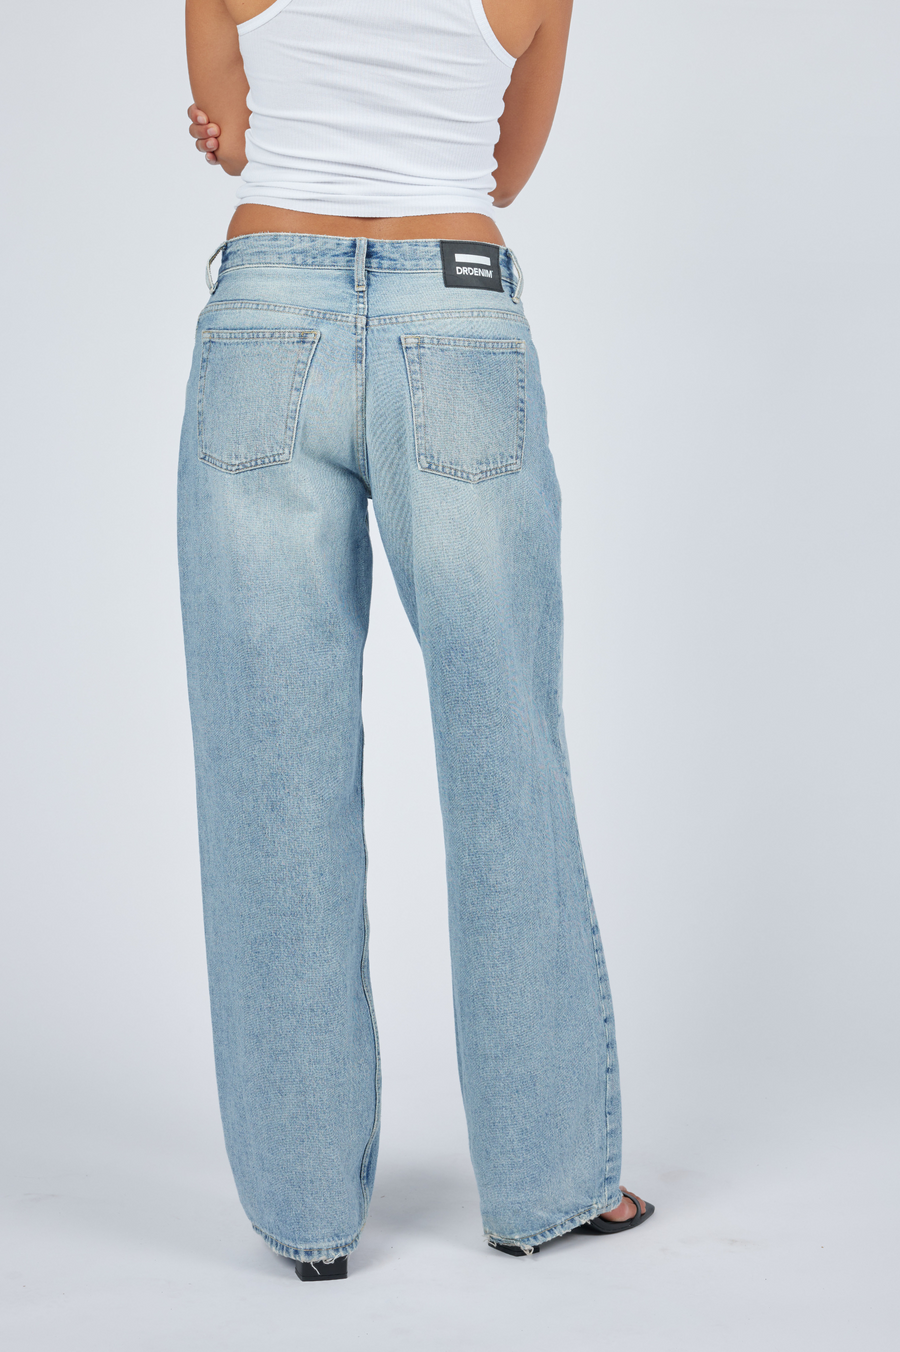 Hill Jeans Drift Light Blue | Dr Denim Jeans Australia – Dr Denim Jeans ...